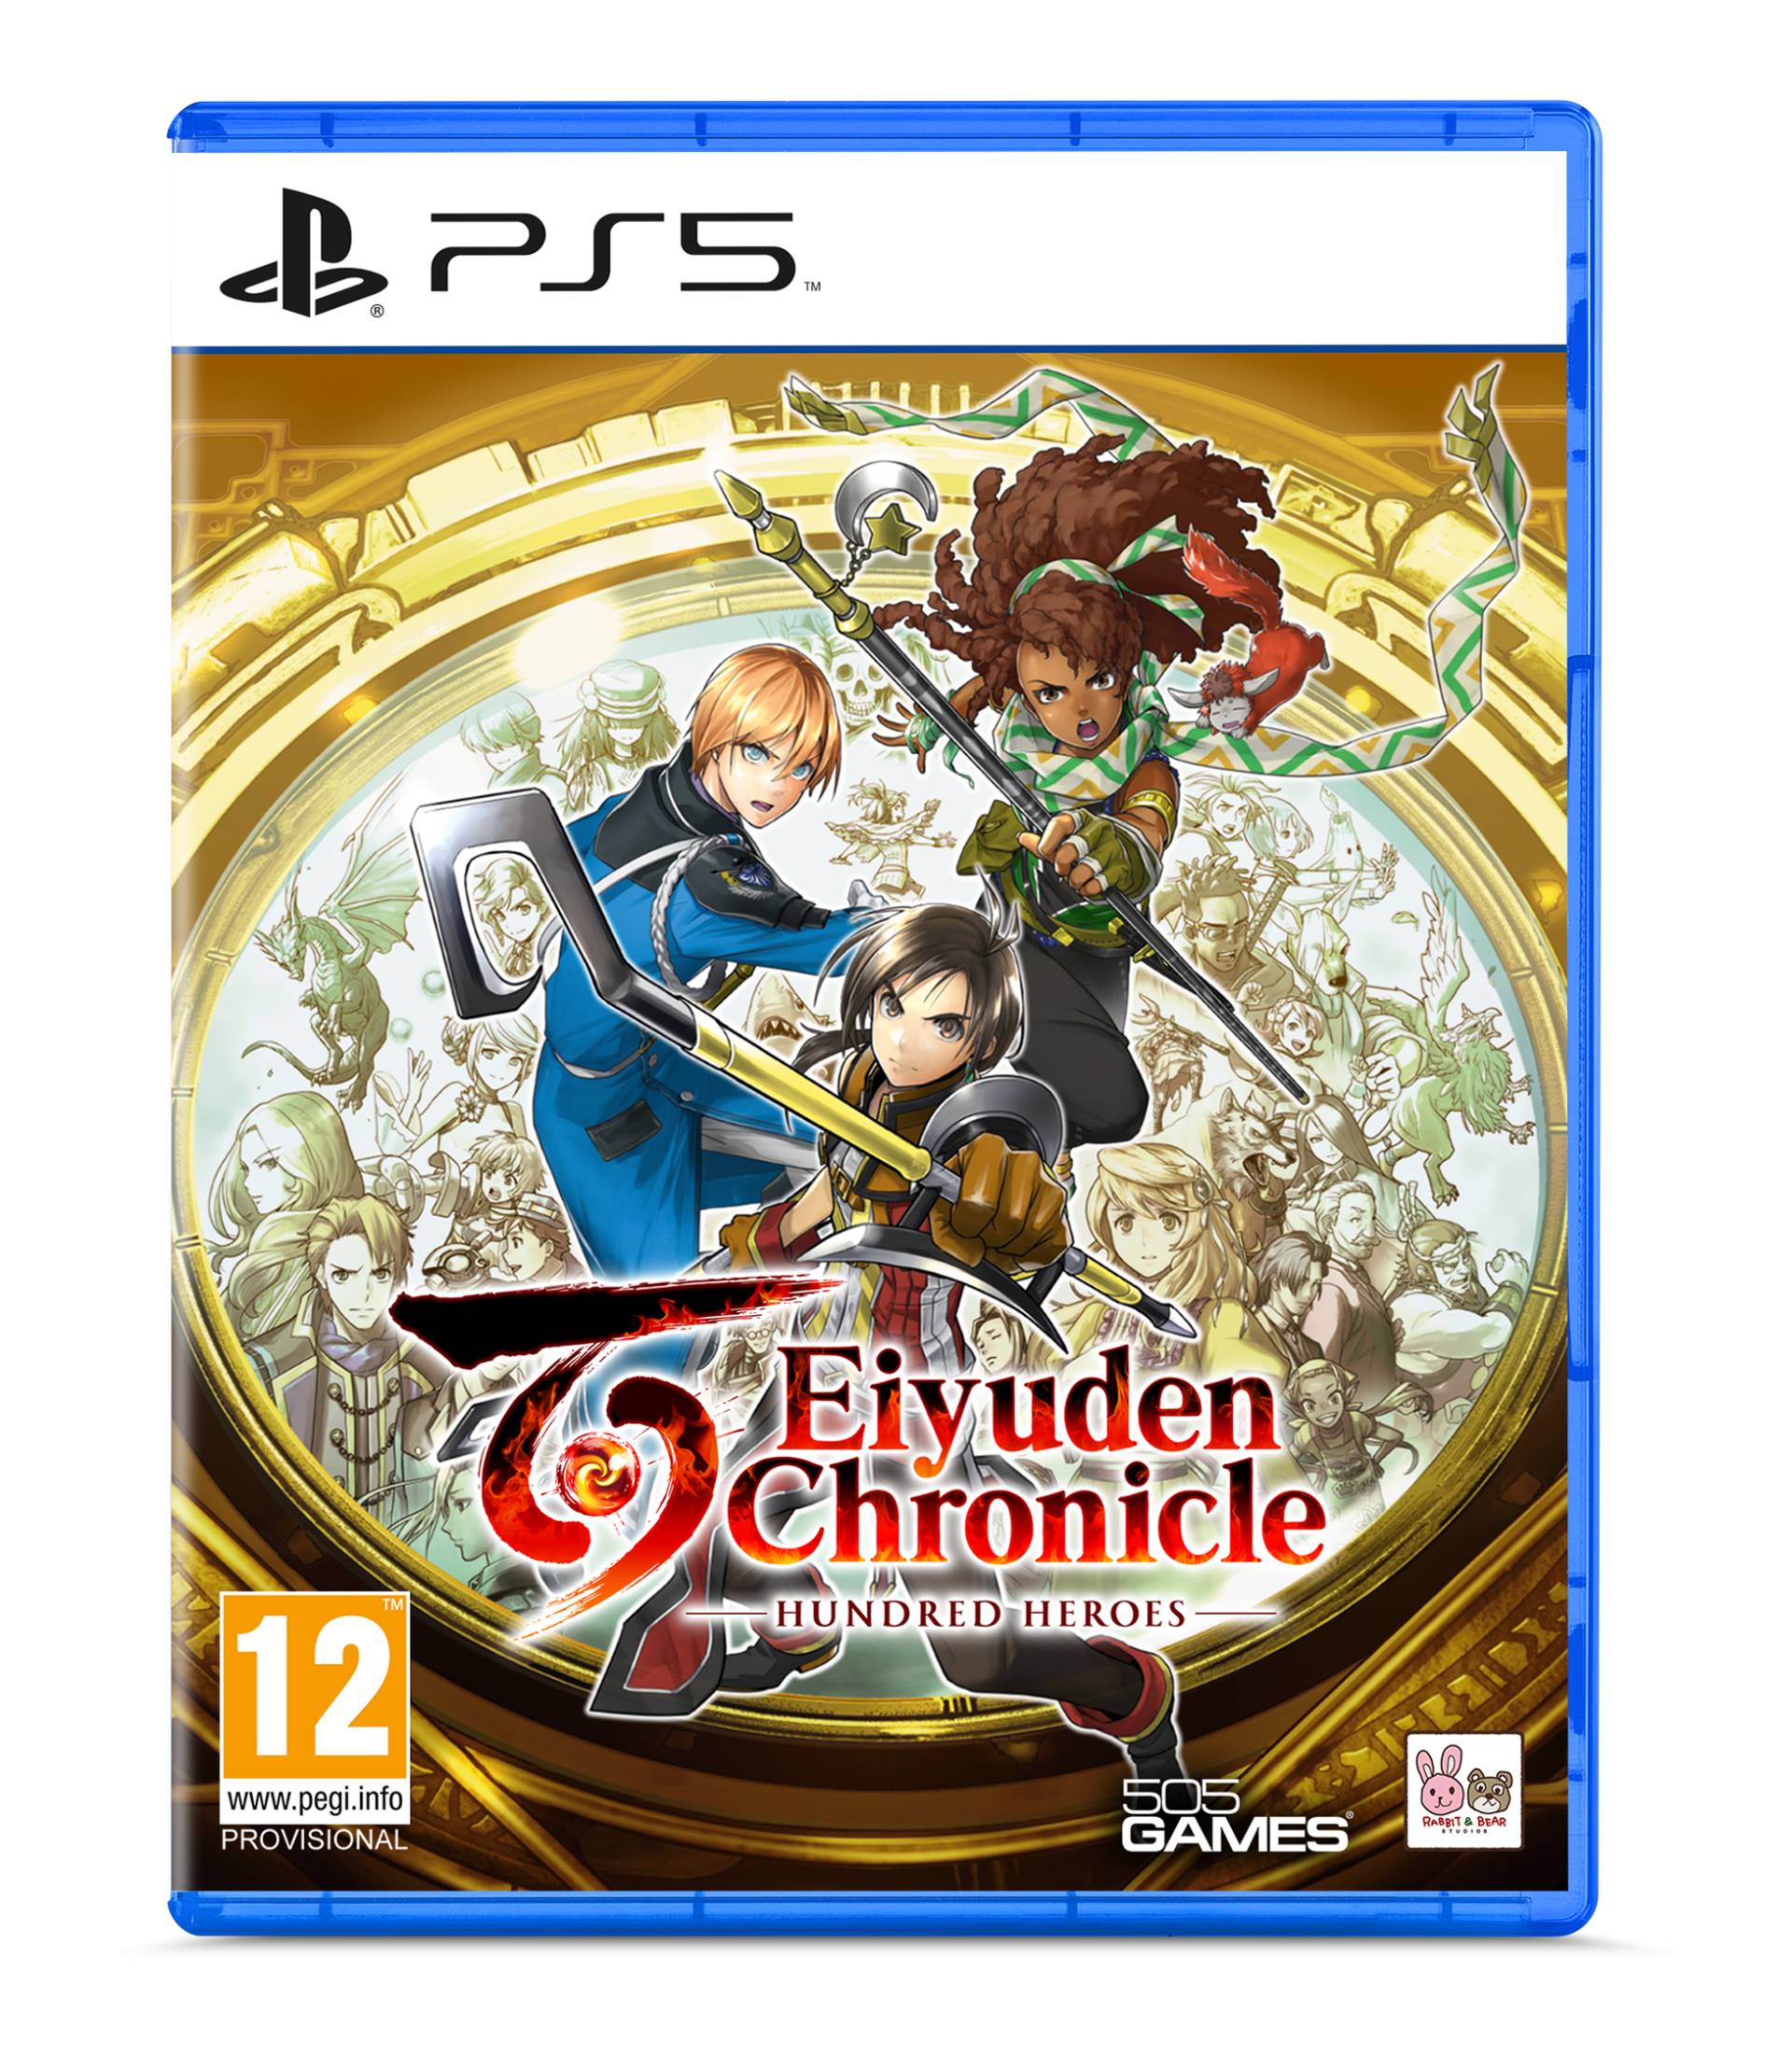 Eiyuden Chronicle Hundred Heroes von 505 Games